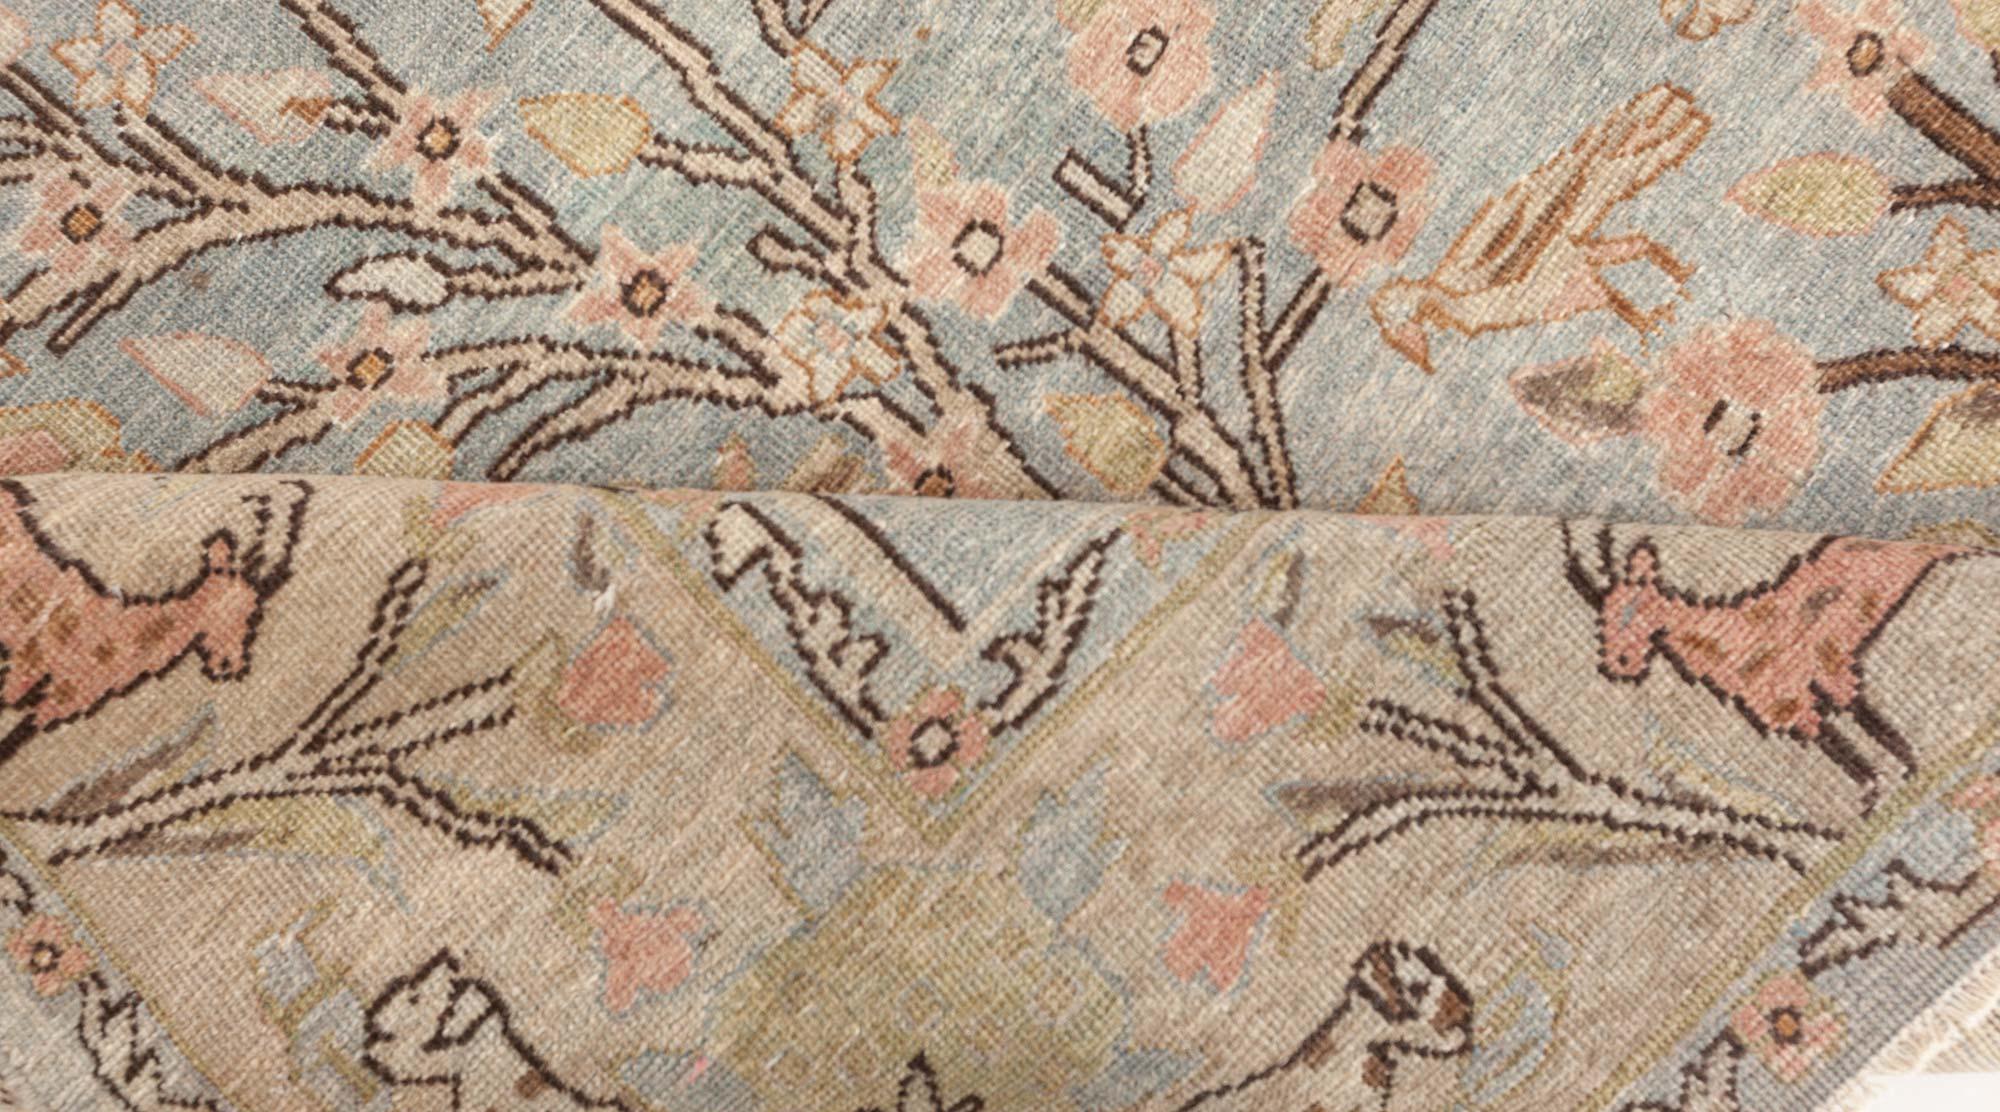 Antique Persian Tabriz rug
Size: 7'4